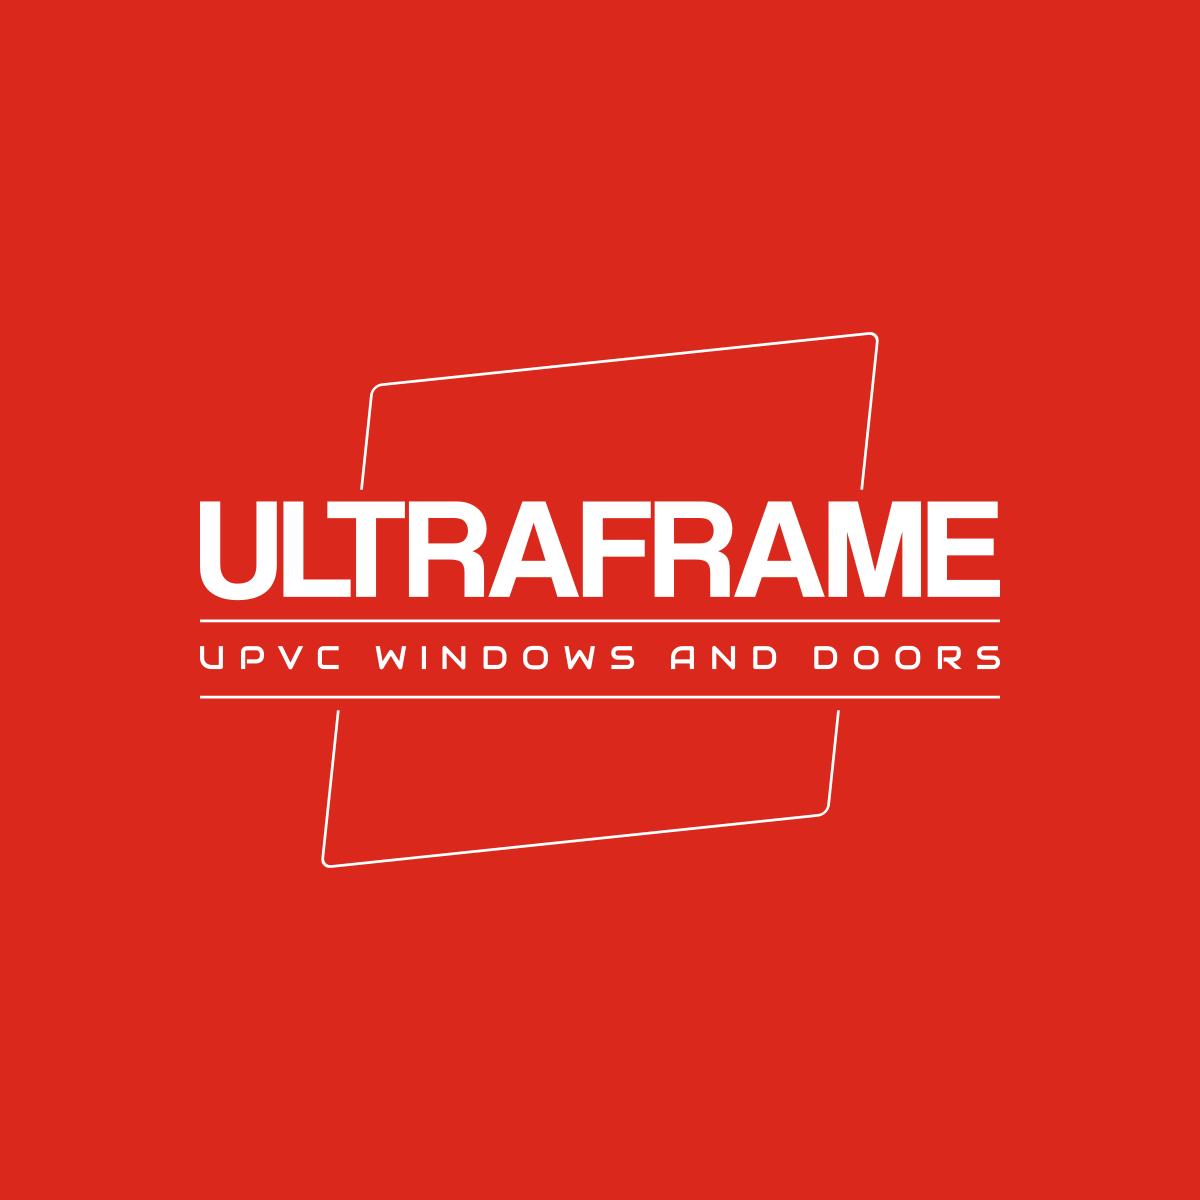 Ultraframe uPVC Windows and Doors (589 Bunnerong Rd) Opening Hours